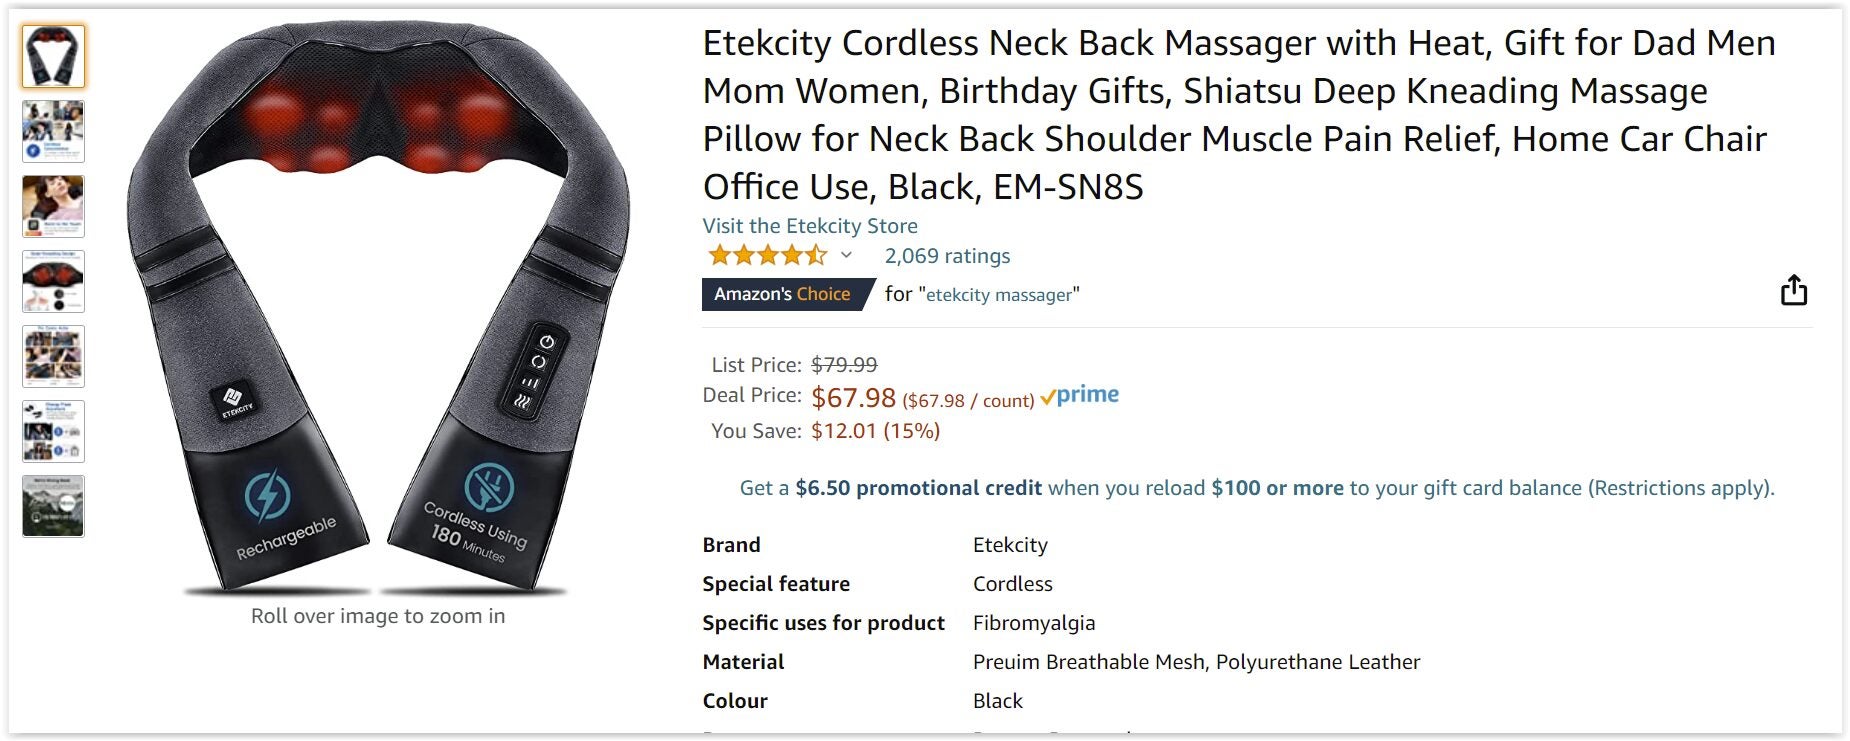  Etekcity Cordless Neck and Back Massager with Heat